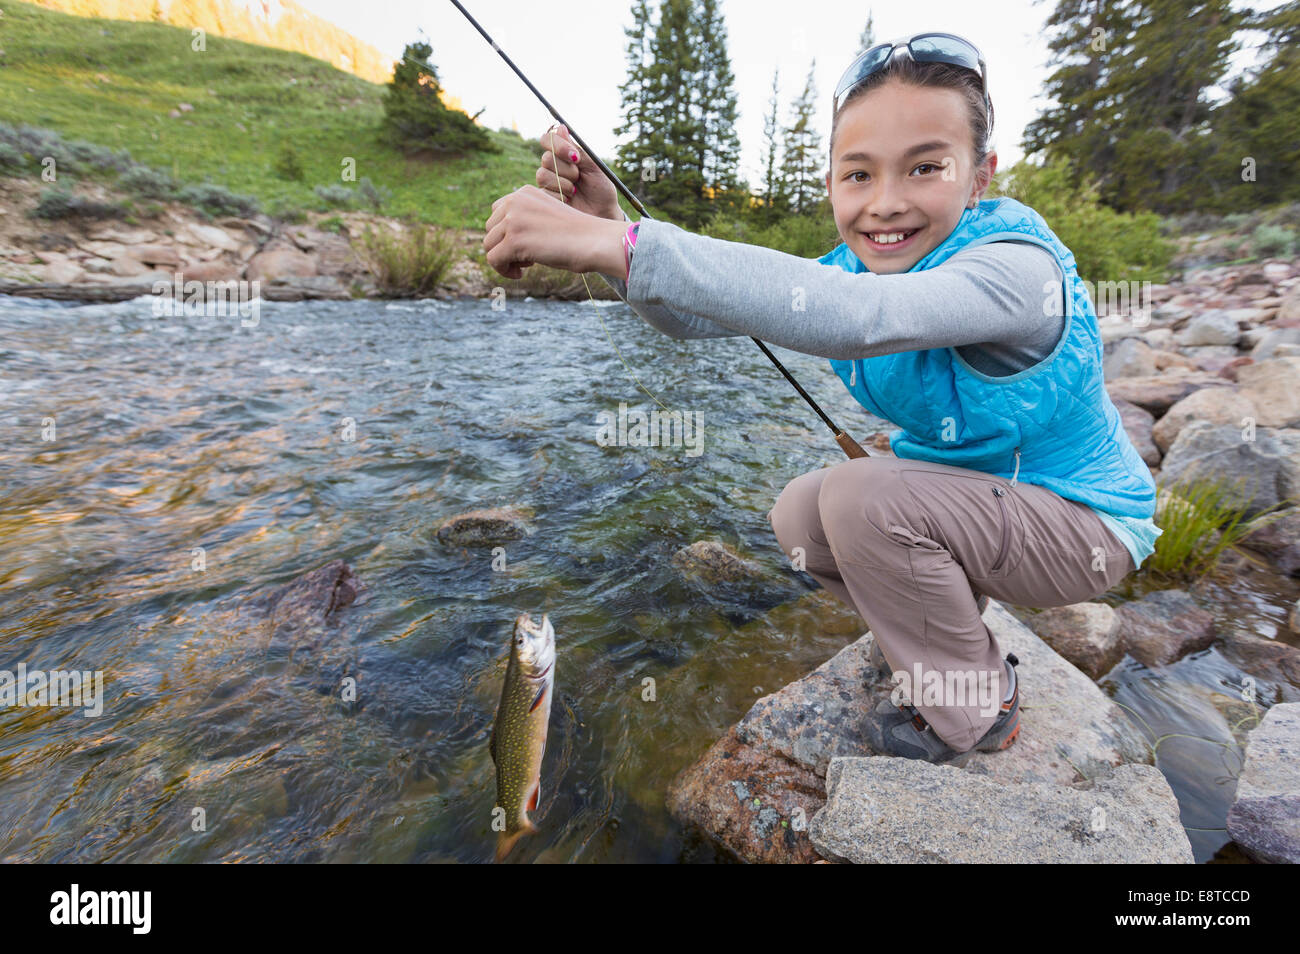 Mixed race girl fishing in river Stock Photo